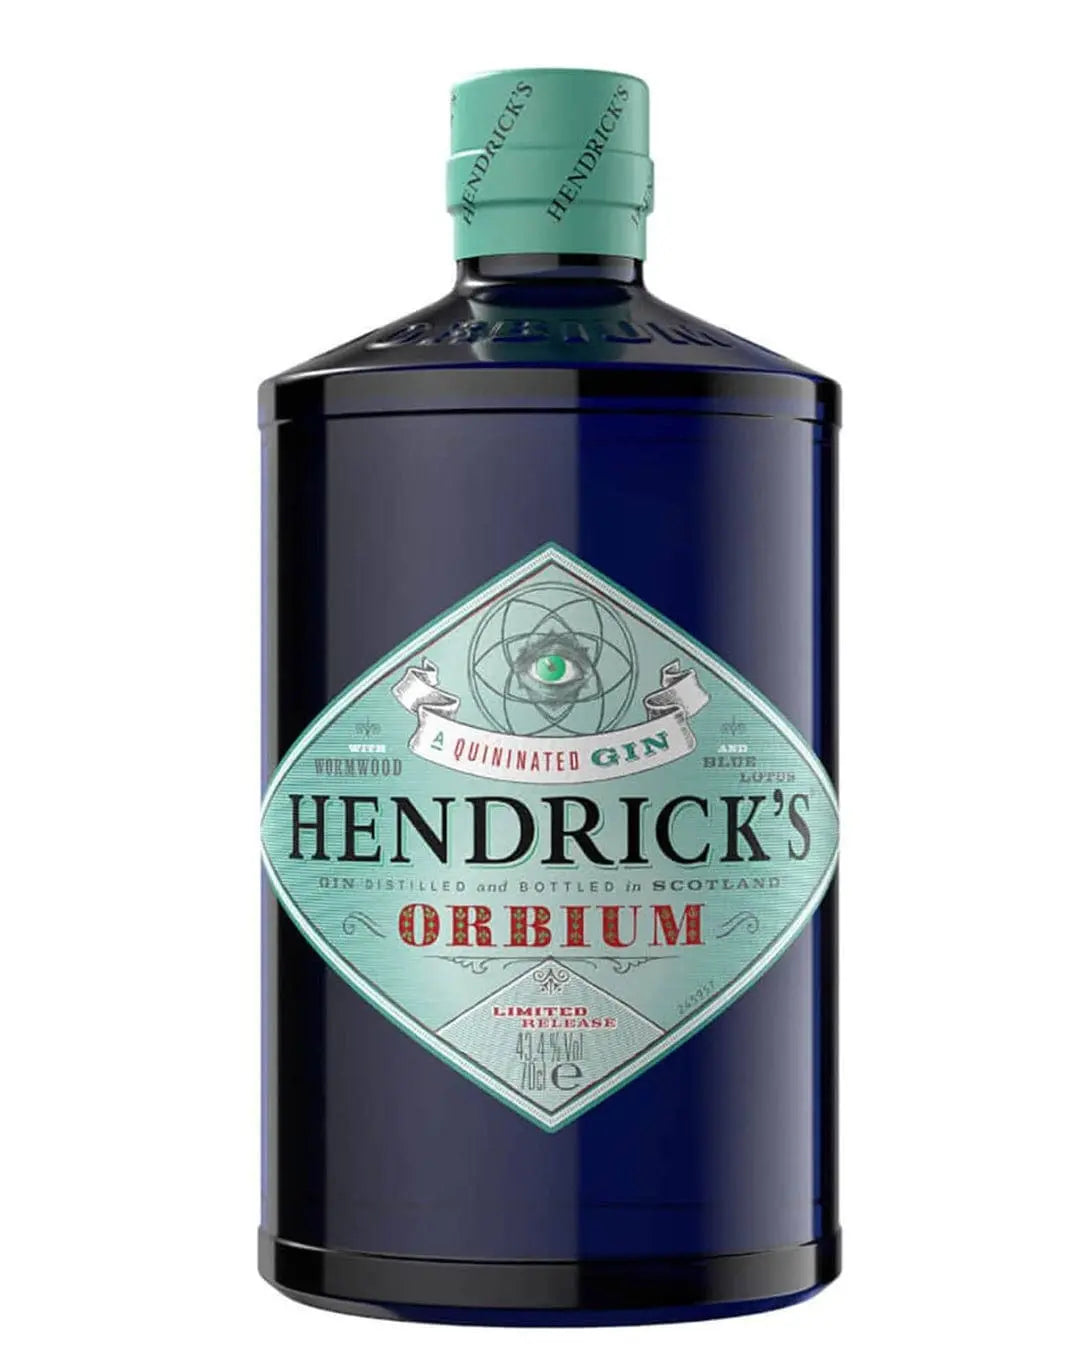 Hendrick's Orbium Gin, 70 cl Gin 5010327705170